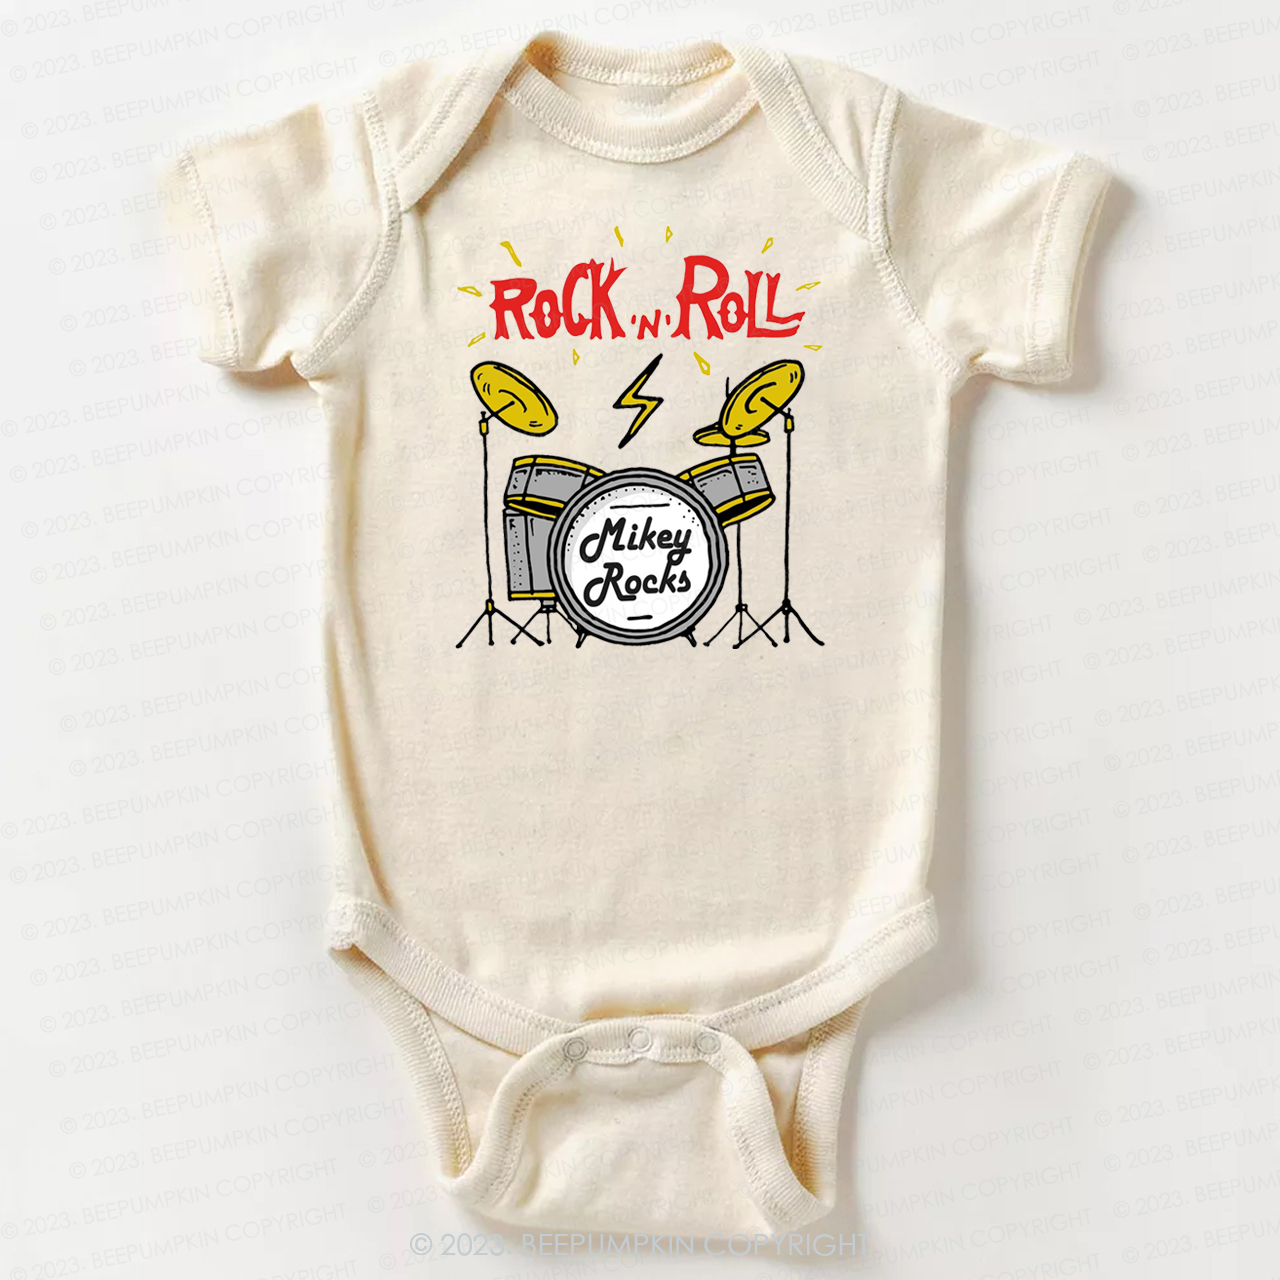 Rock 'n' Roll Future Music Rock Star Bodysuit For Baby